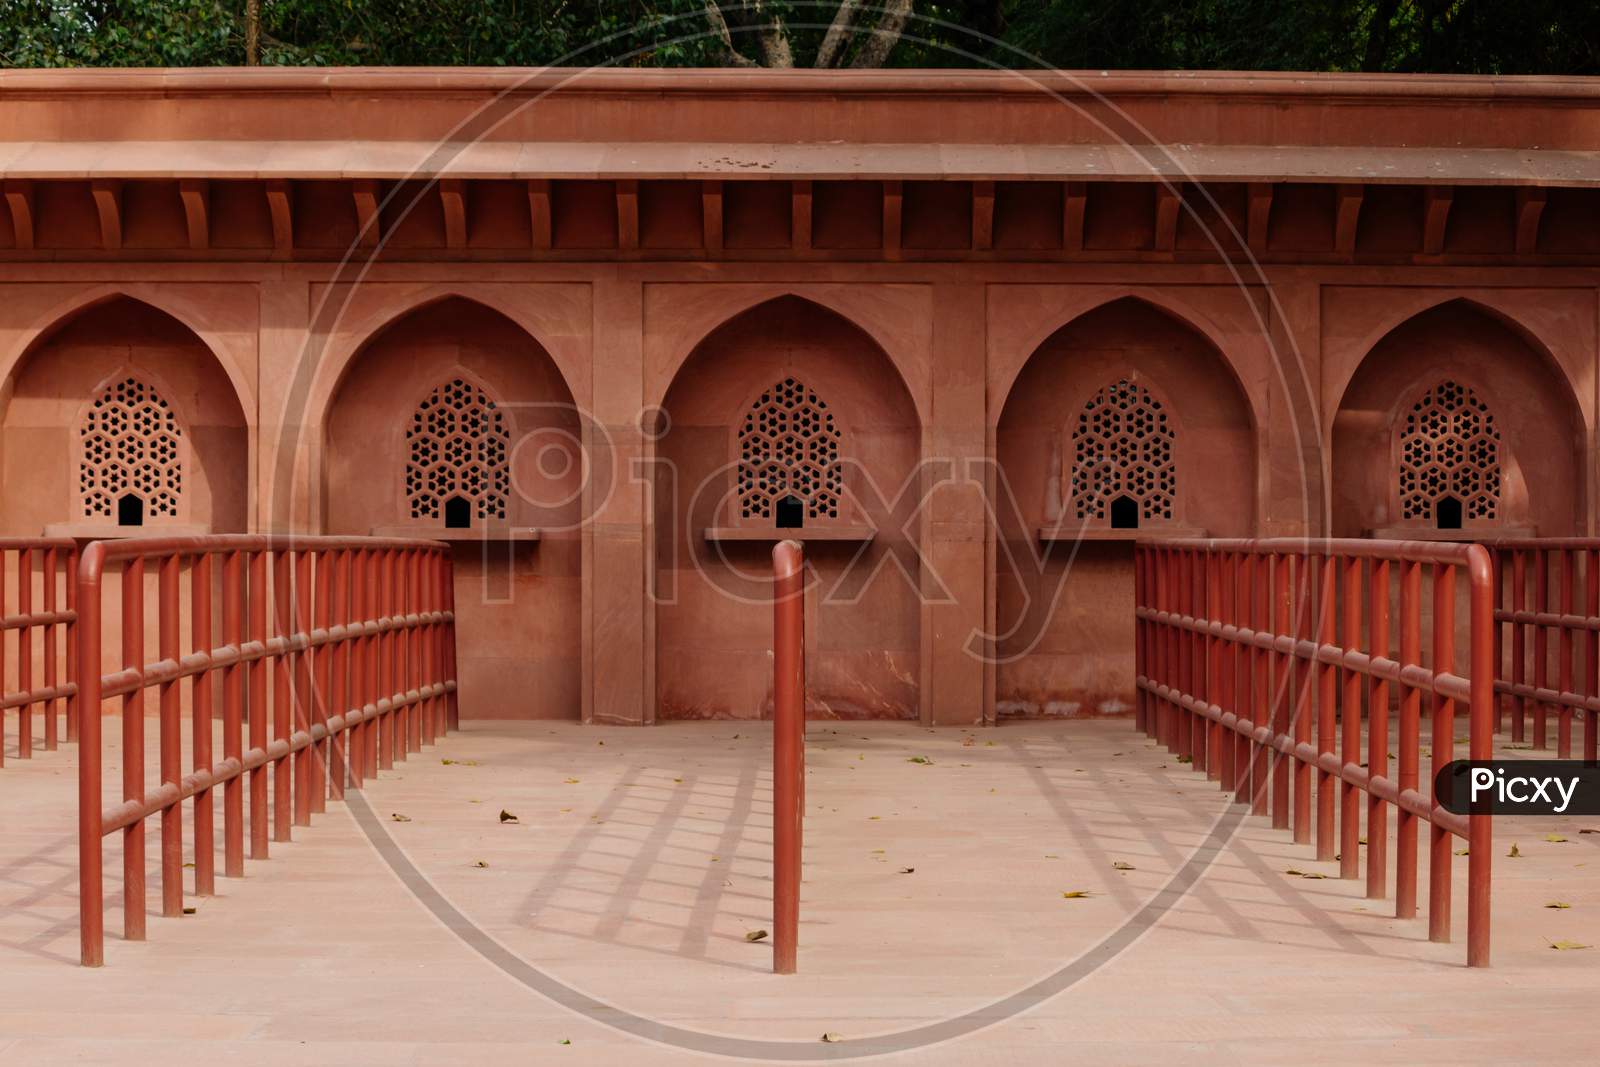 Ticket Counter Room Red Fort (Lal Qila) Delhi - World Heritage Site. Delhi, India